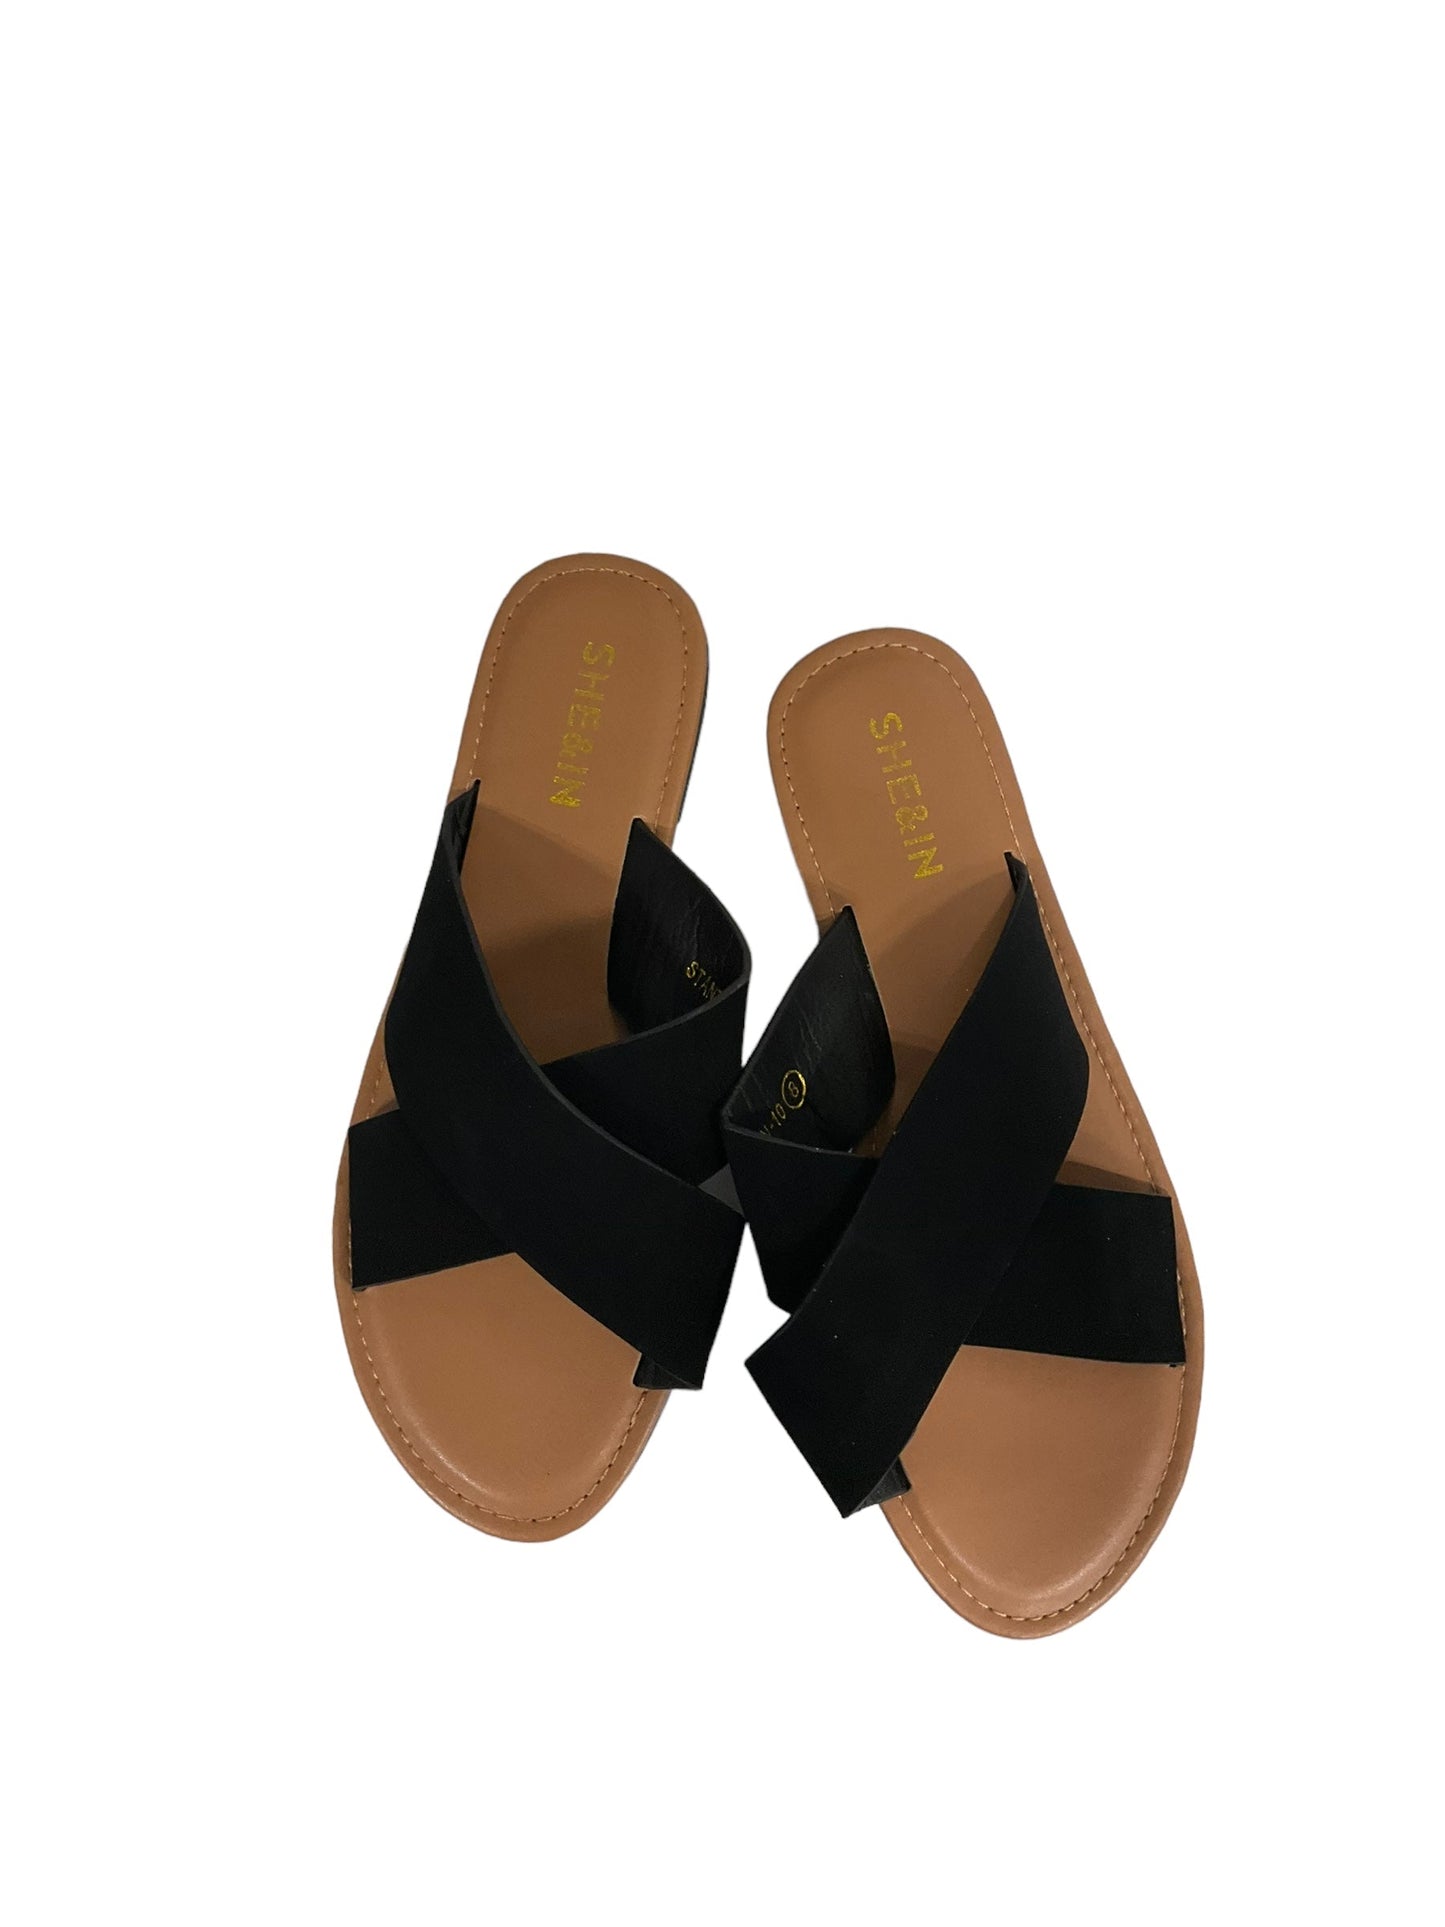 Black Sandals Flats Shein, Size 8